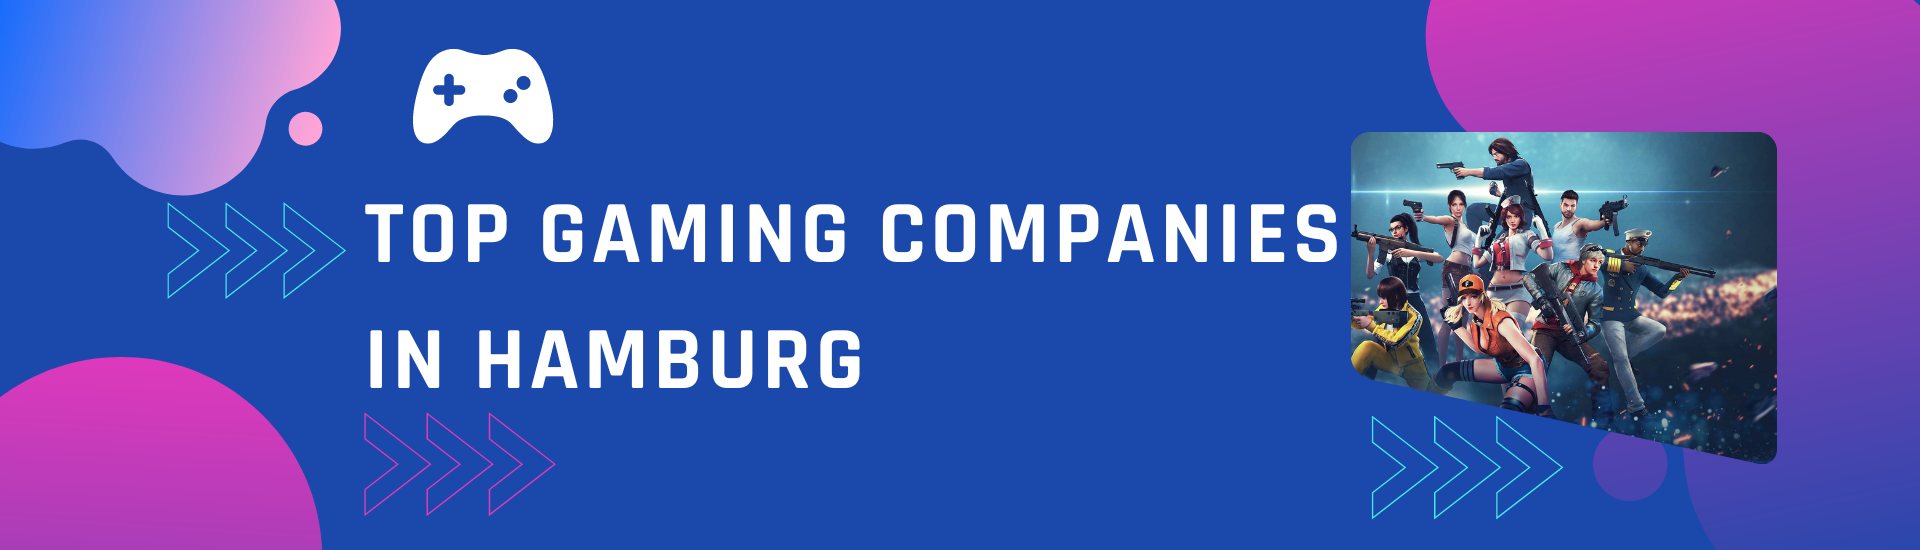 Top Gaming Companies in Hamburg